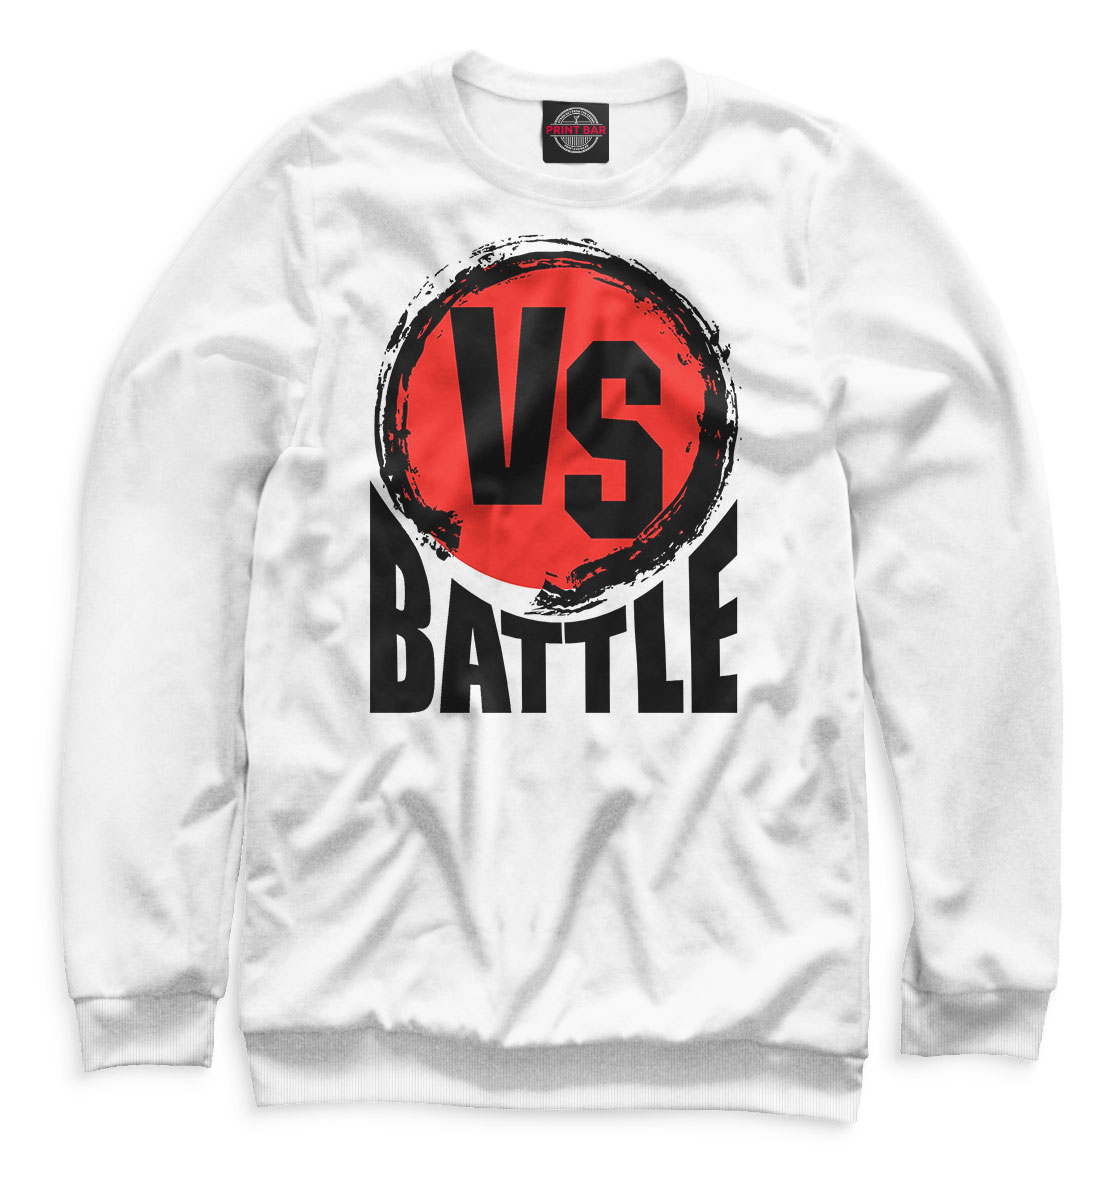 Свитшот Versus Battle VSB-146968-swi-1